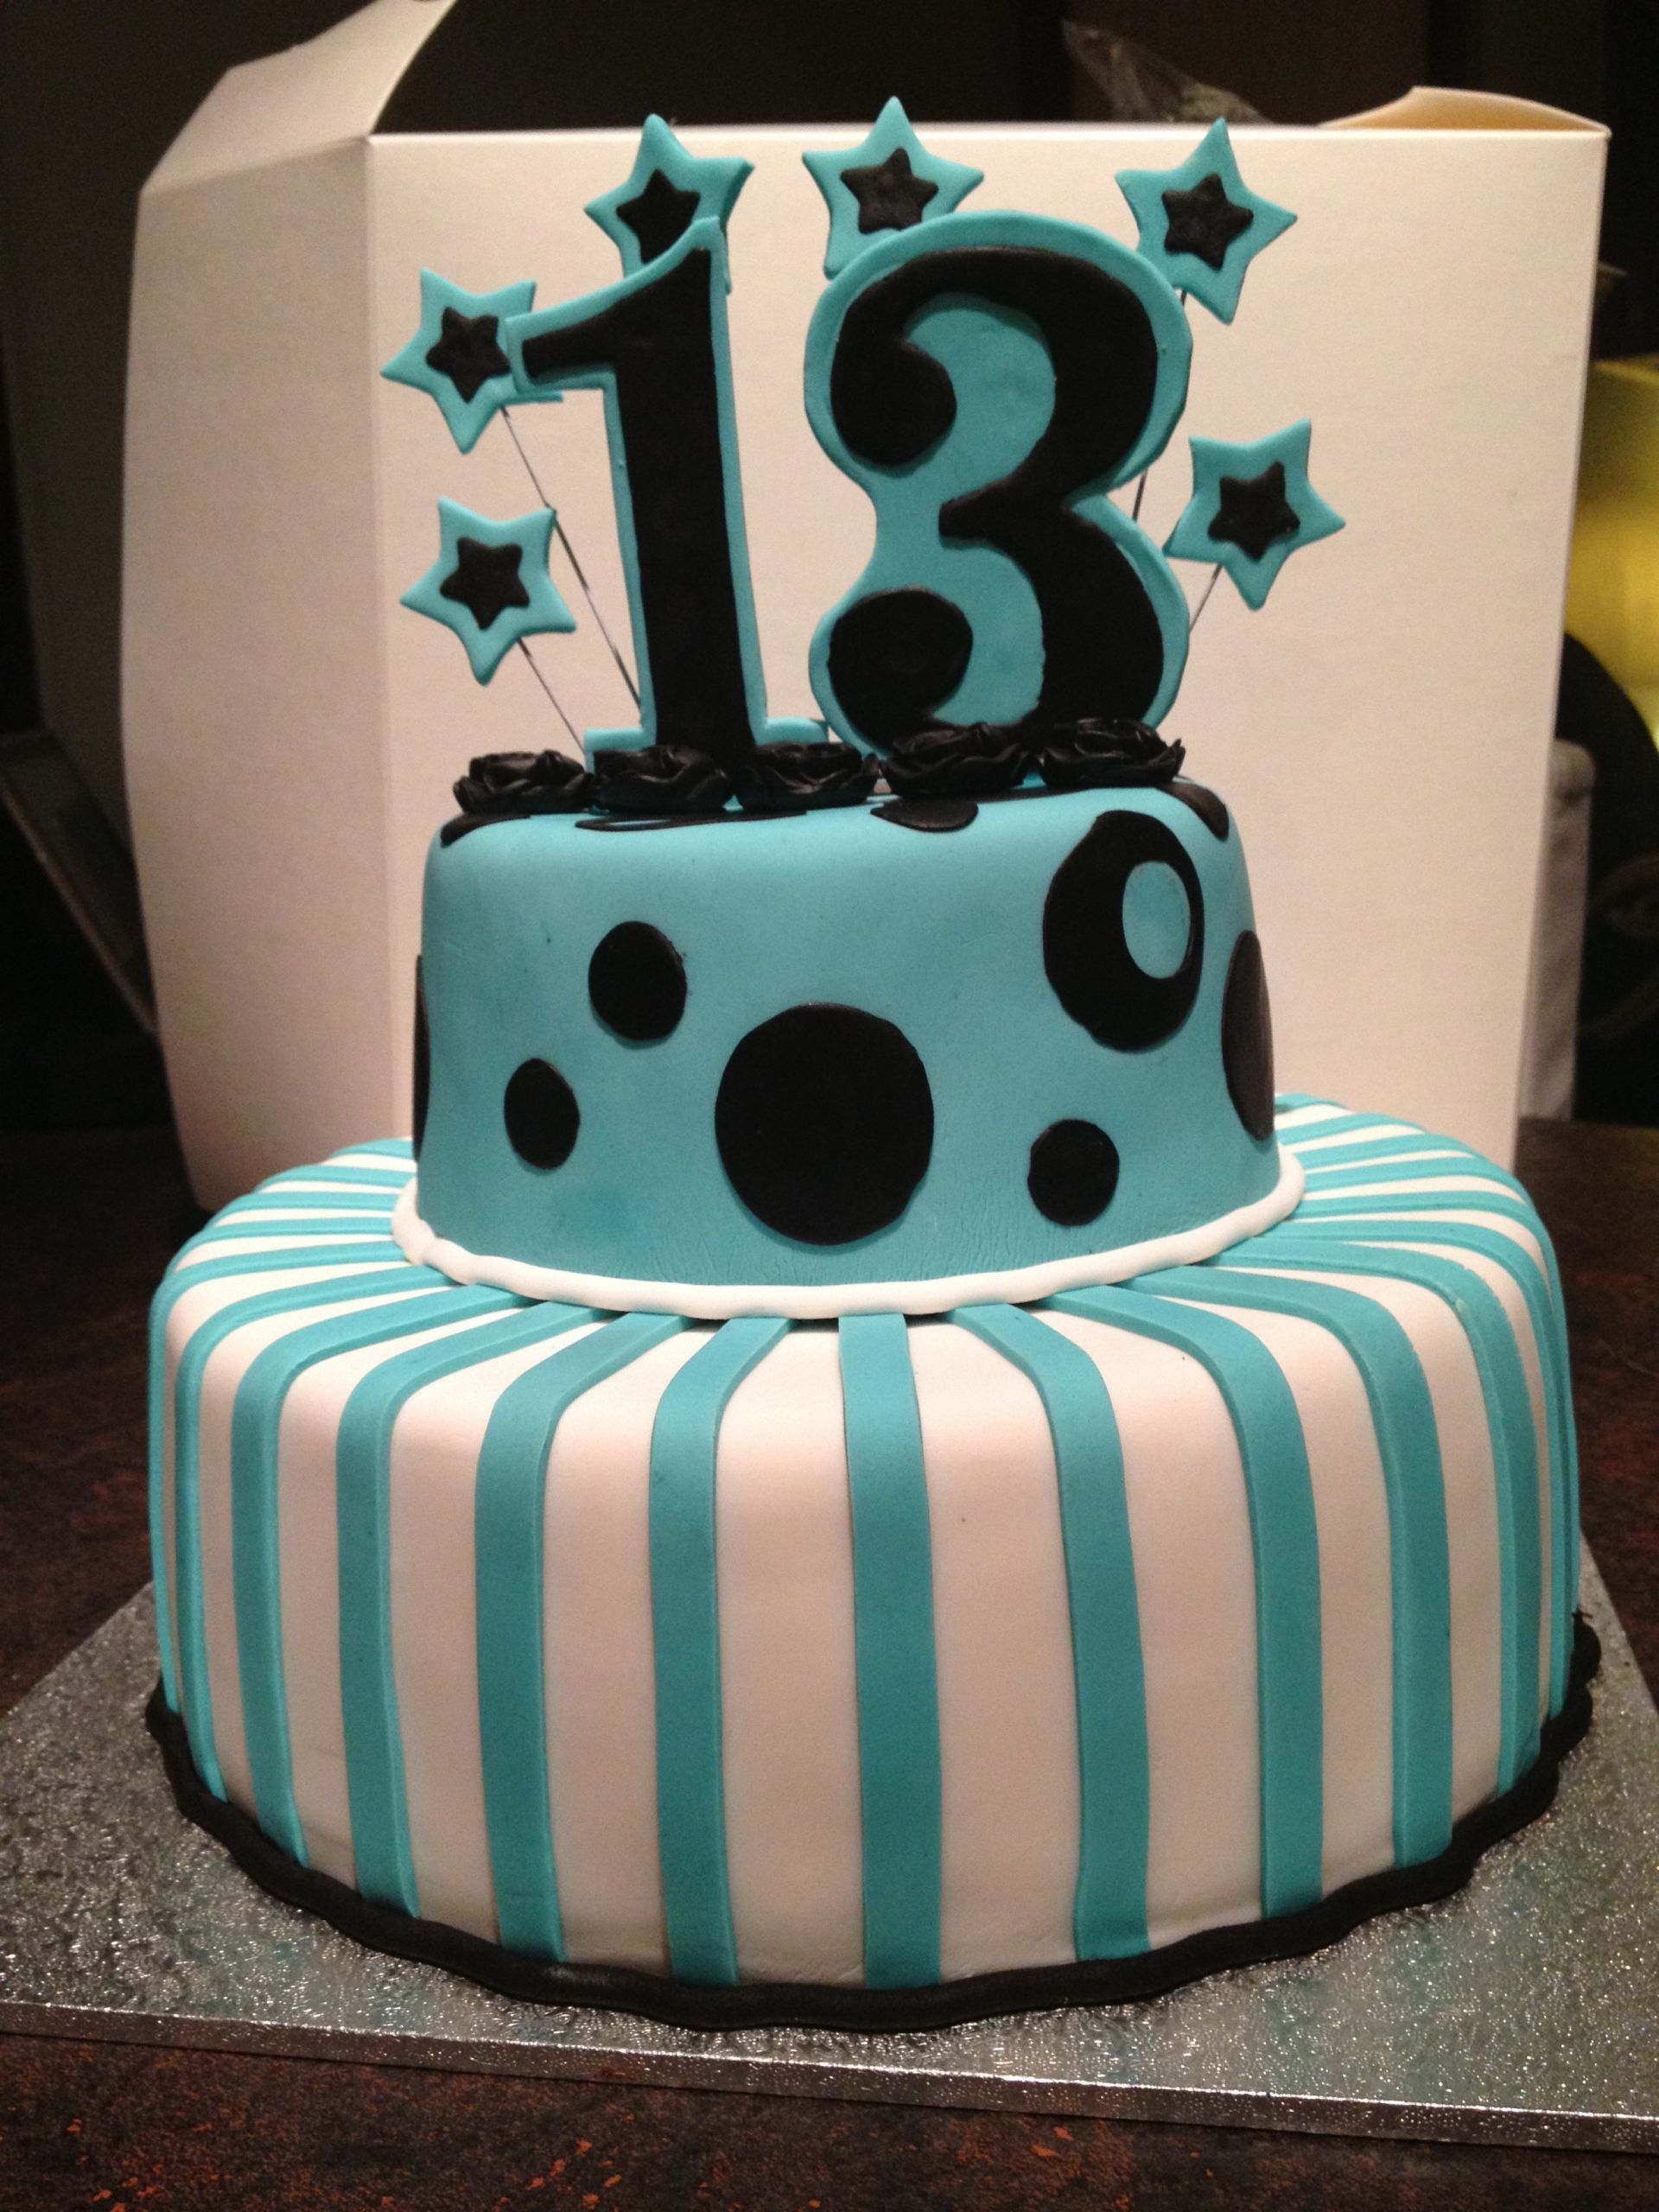 13th Birthday Cake Ideas
 Teal white black 13th birthday cake …